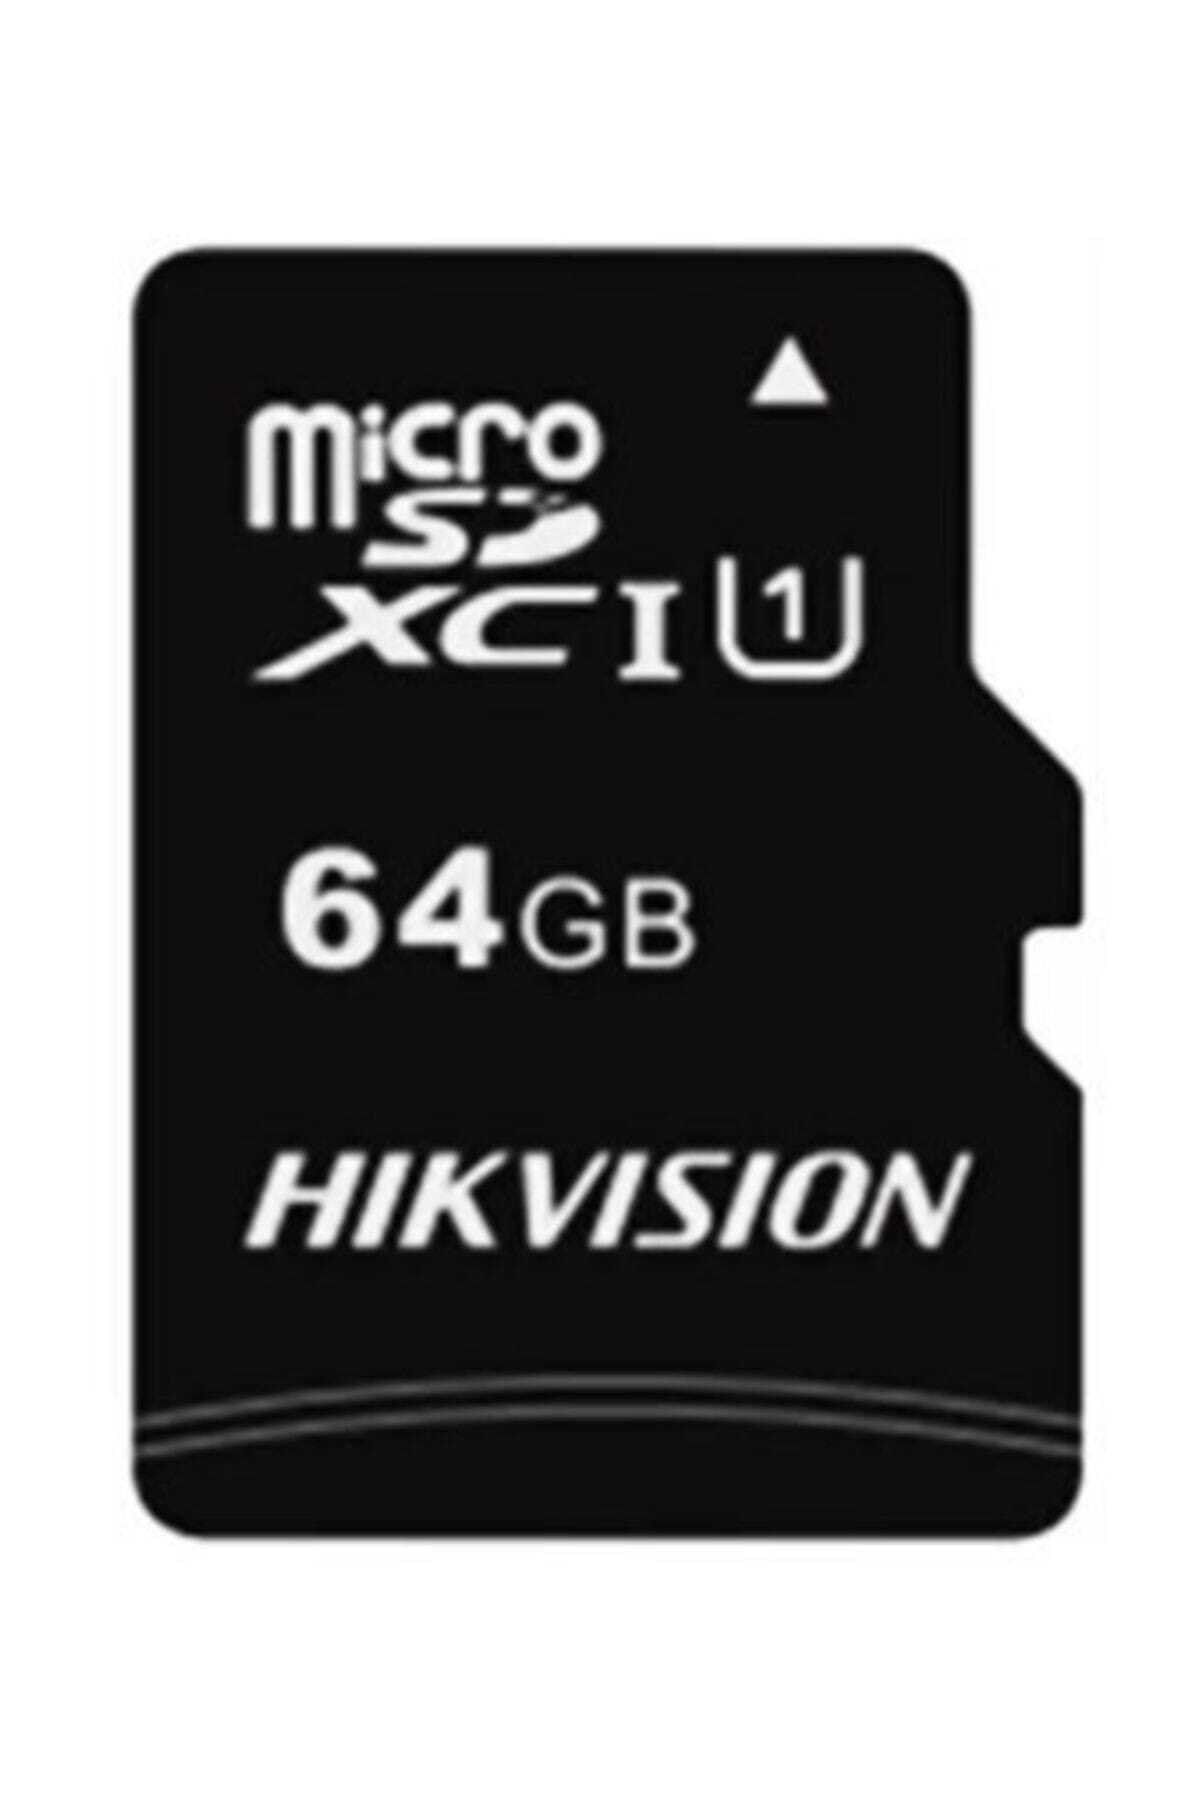 Hikvision 64GB CLASS 10 MICROSD CARD HS-TF-C1-64G